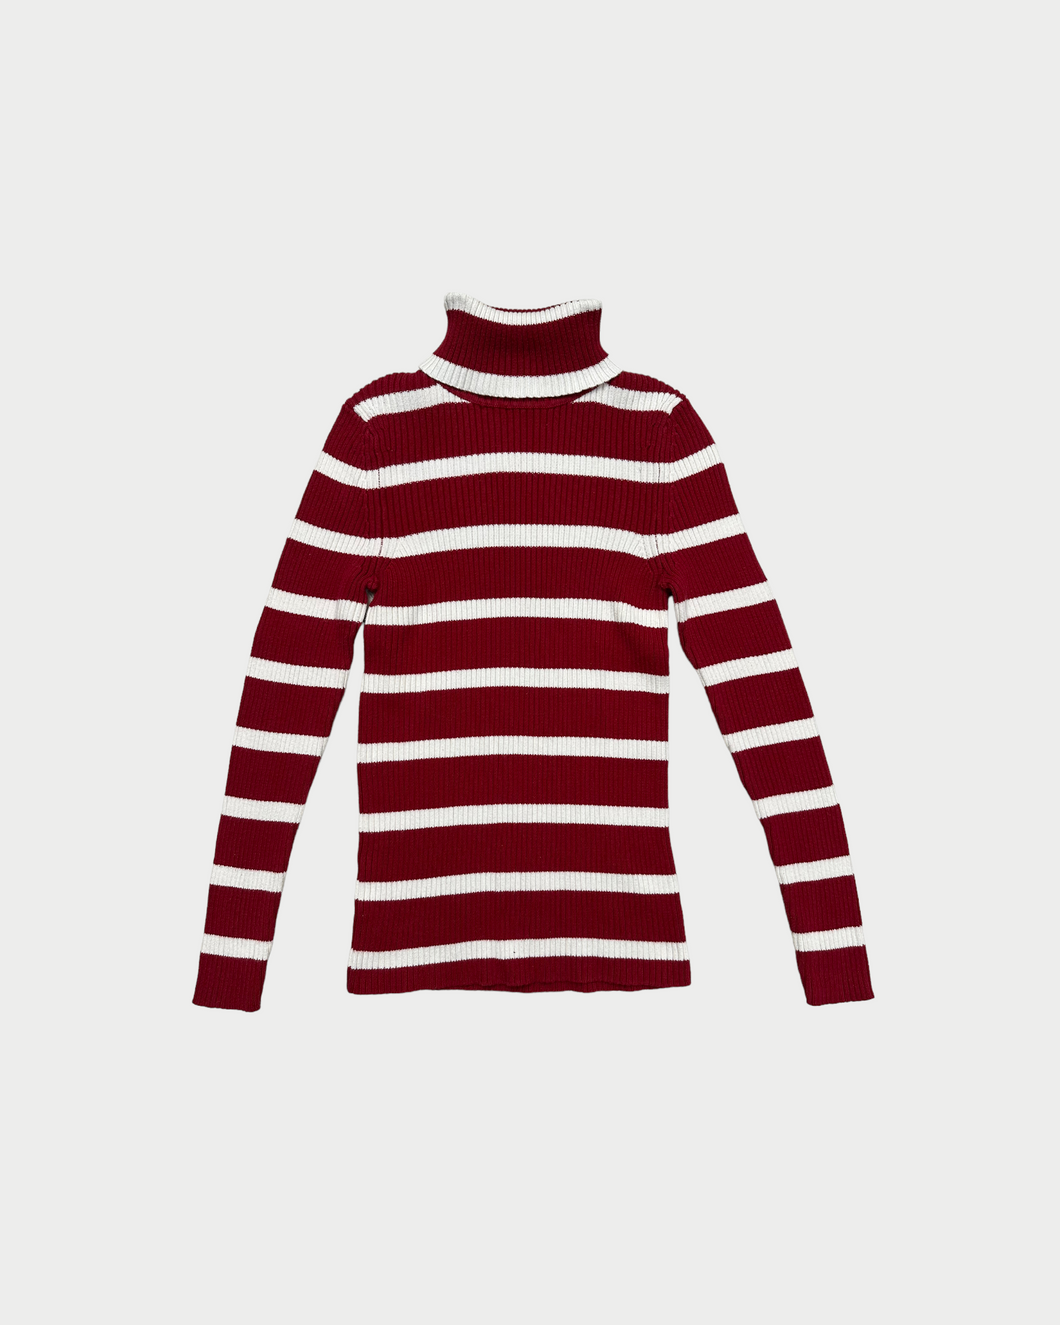 Loft Red Striped Turtleneck Sweater (S)